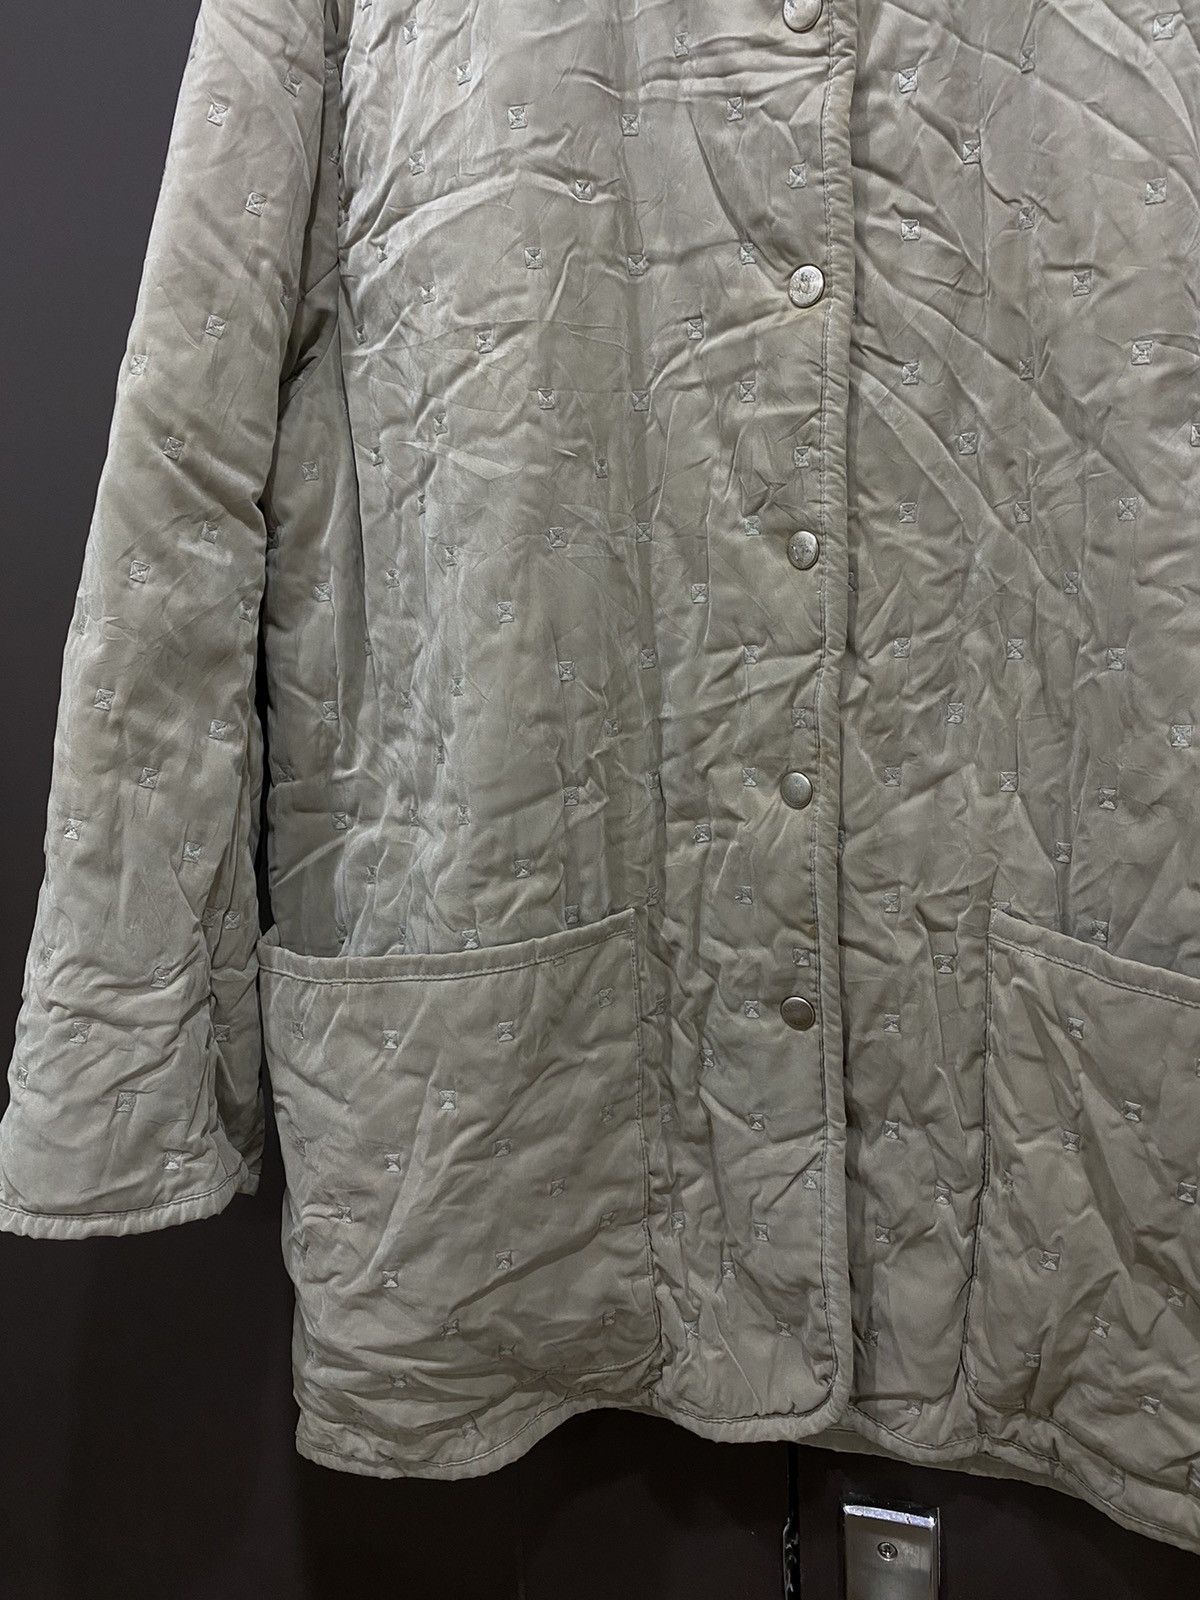 Authentic Hermès Jacket Beige Quilted France 42 Coat - 15